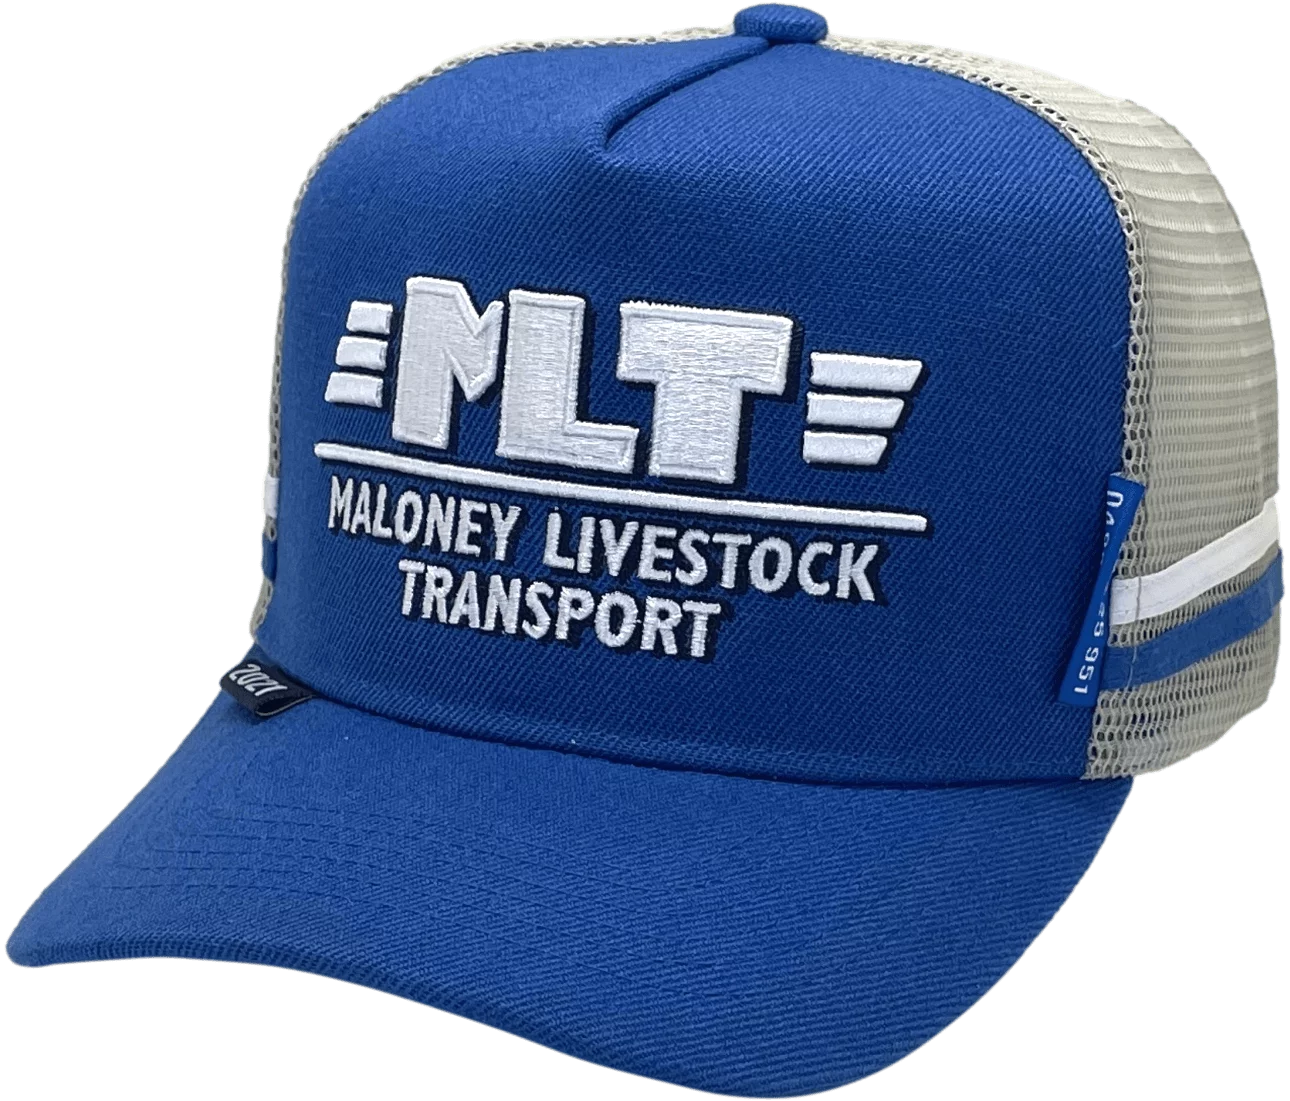 Maloney Livestock Transport Tamworth NSW HP Midrange Aussie Trucker Hat with exclusive Australian Head Fit Crown Size